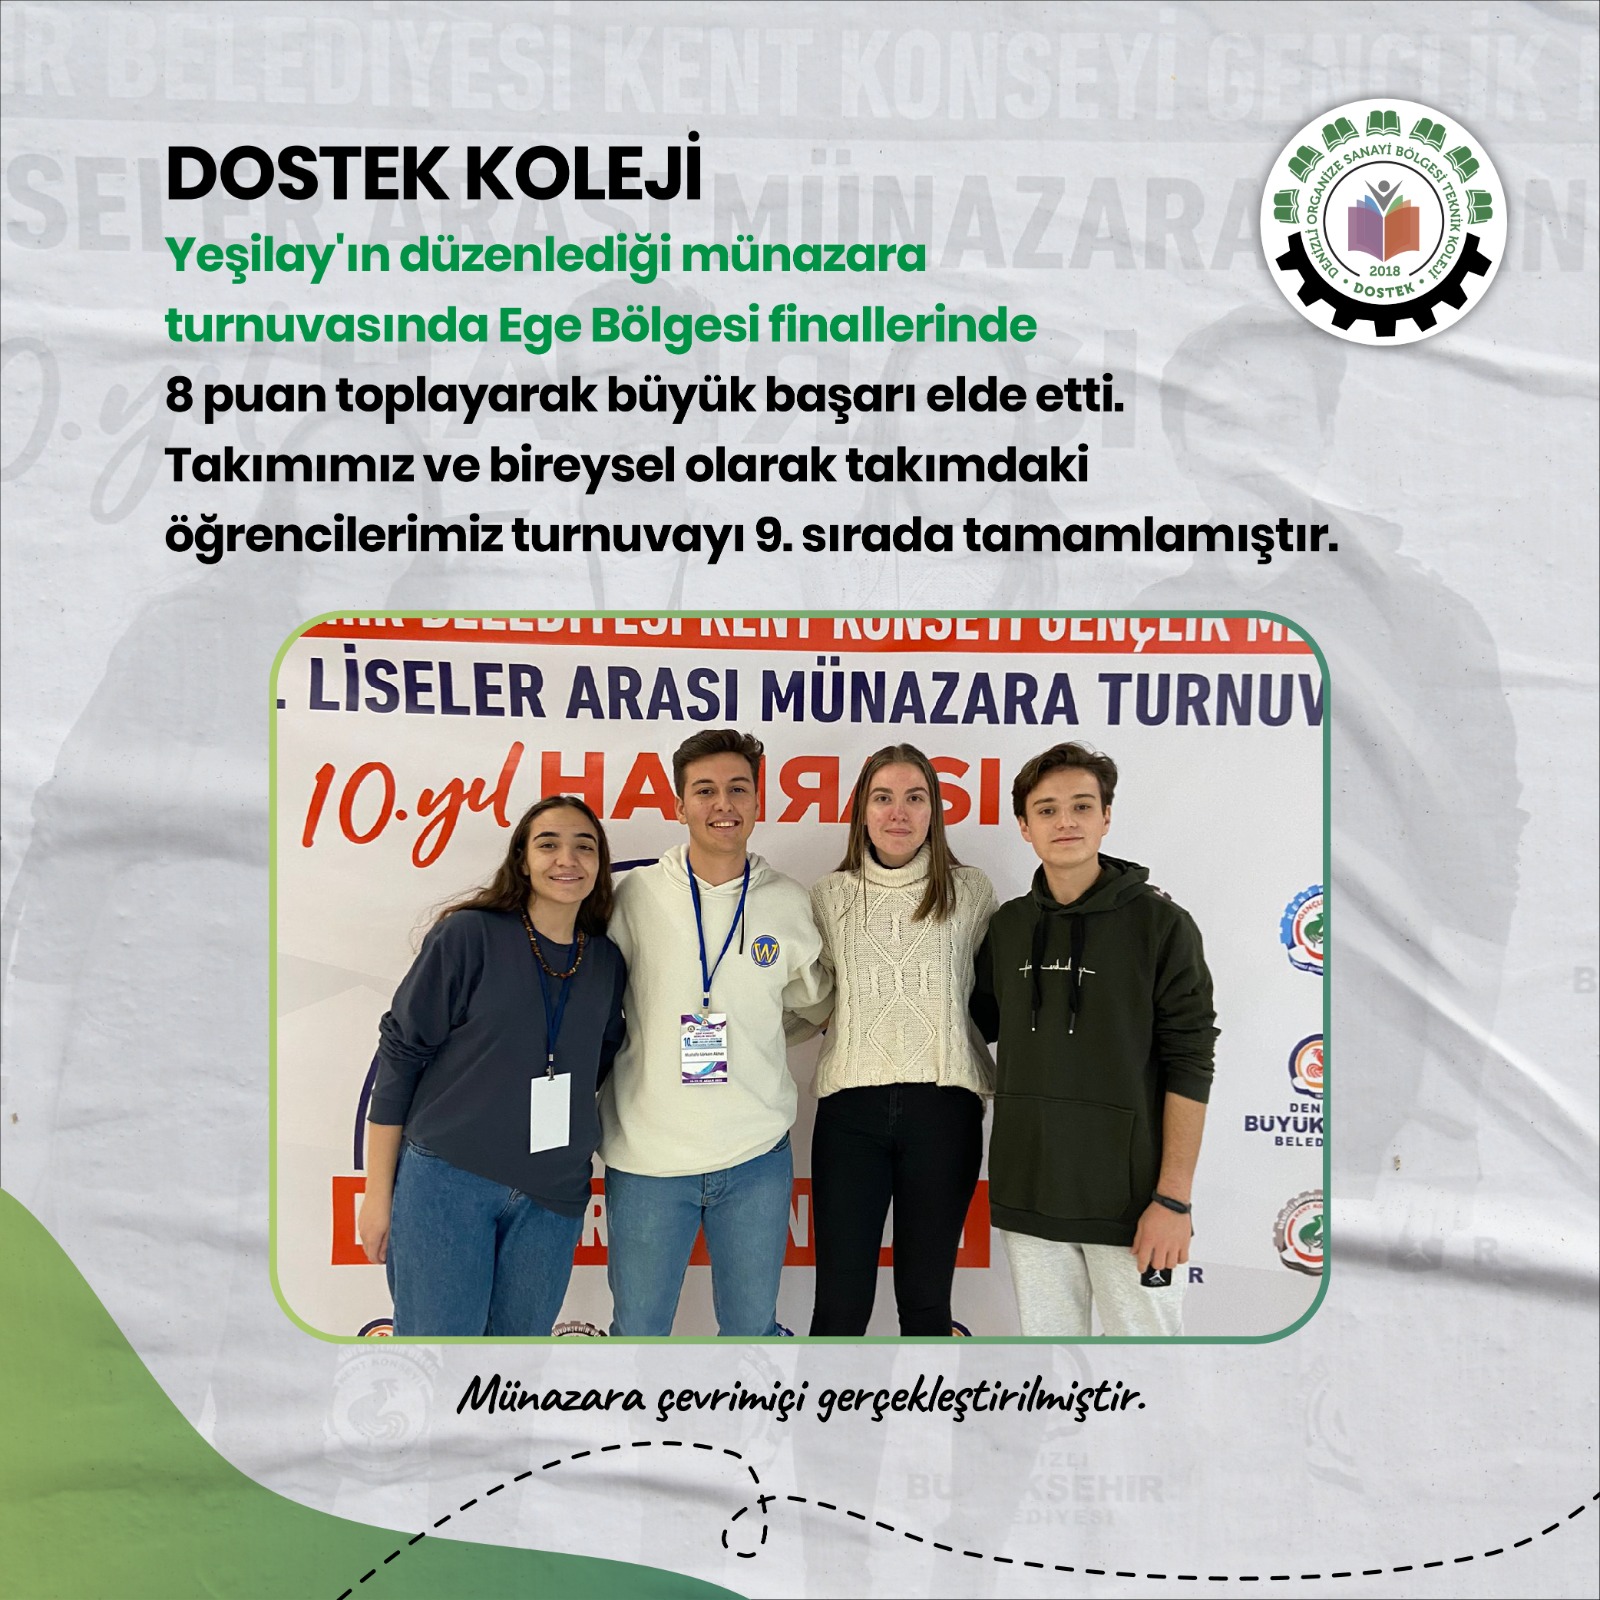 https://www.dostekkoleji.com/dostek-koleji-ege-bolgesi-munazara-turnuvasinda-9-oldu